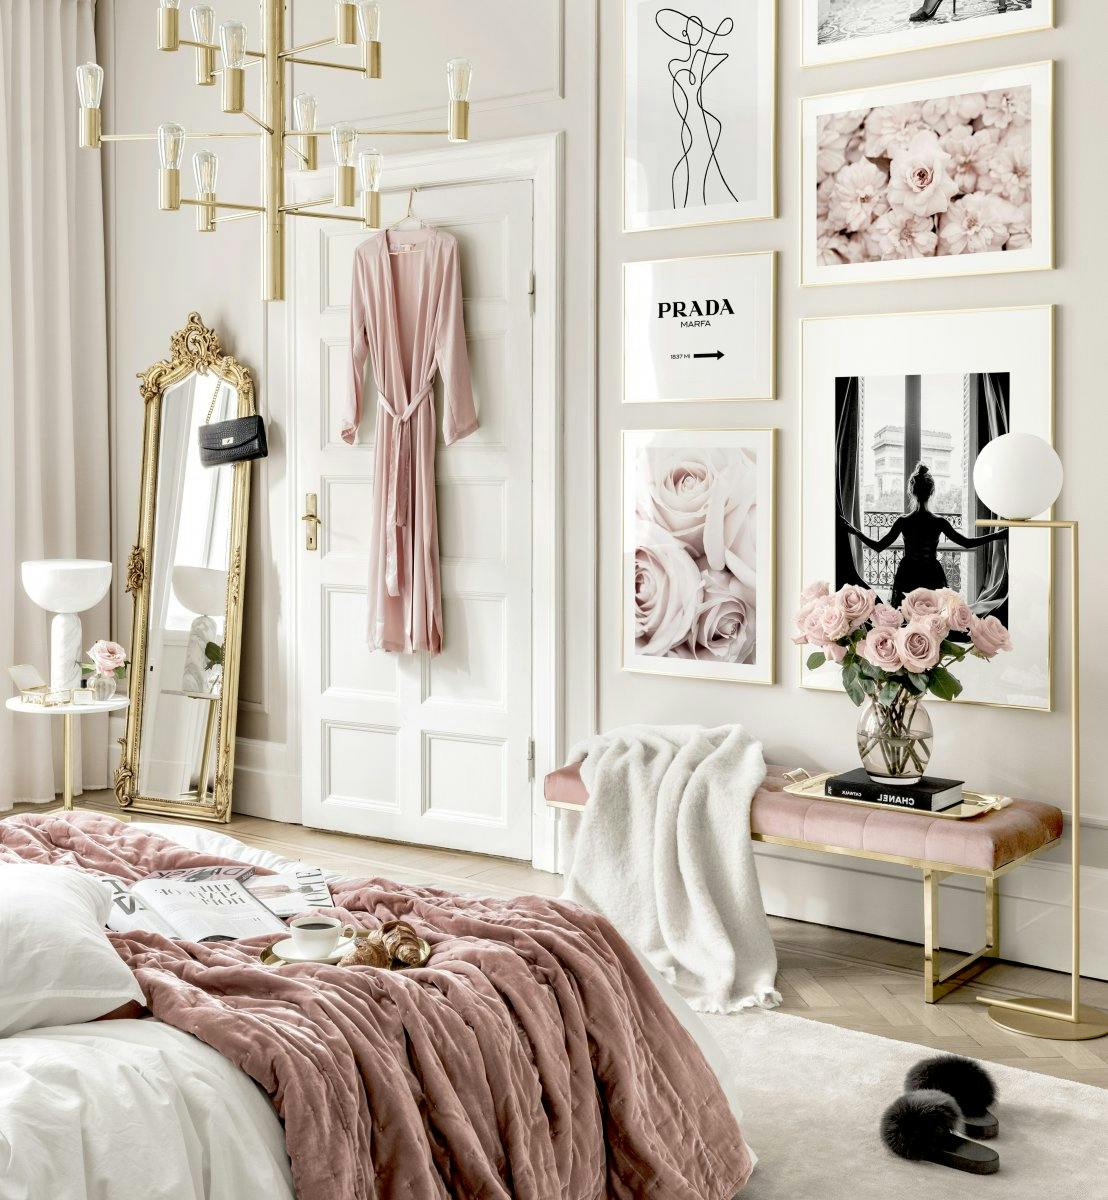 Mural de cuadros dormitorio moda fashion pósters de flores marcos dorados